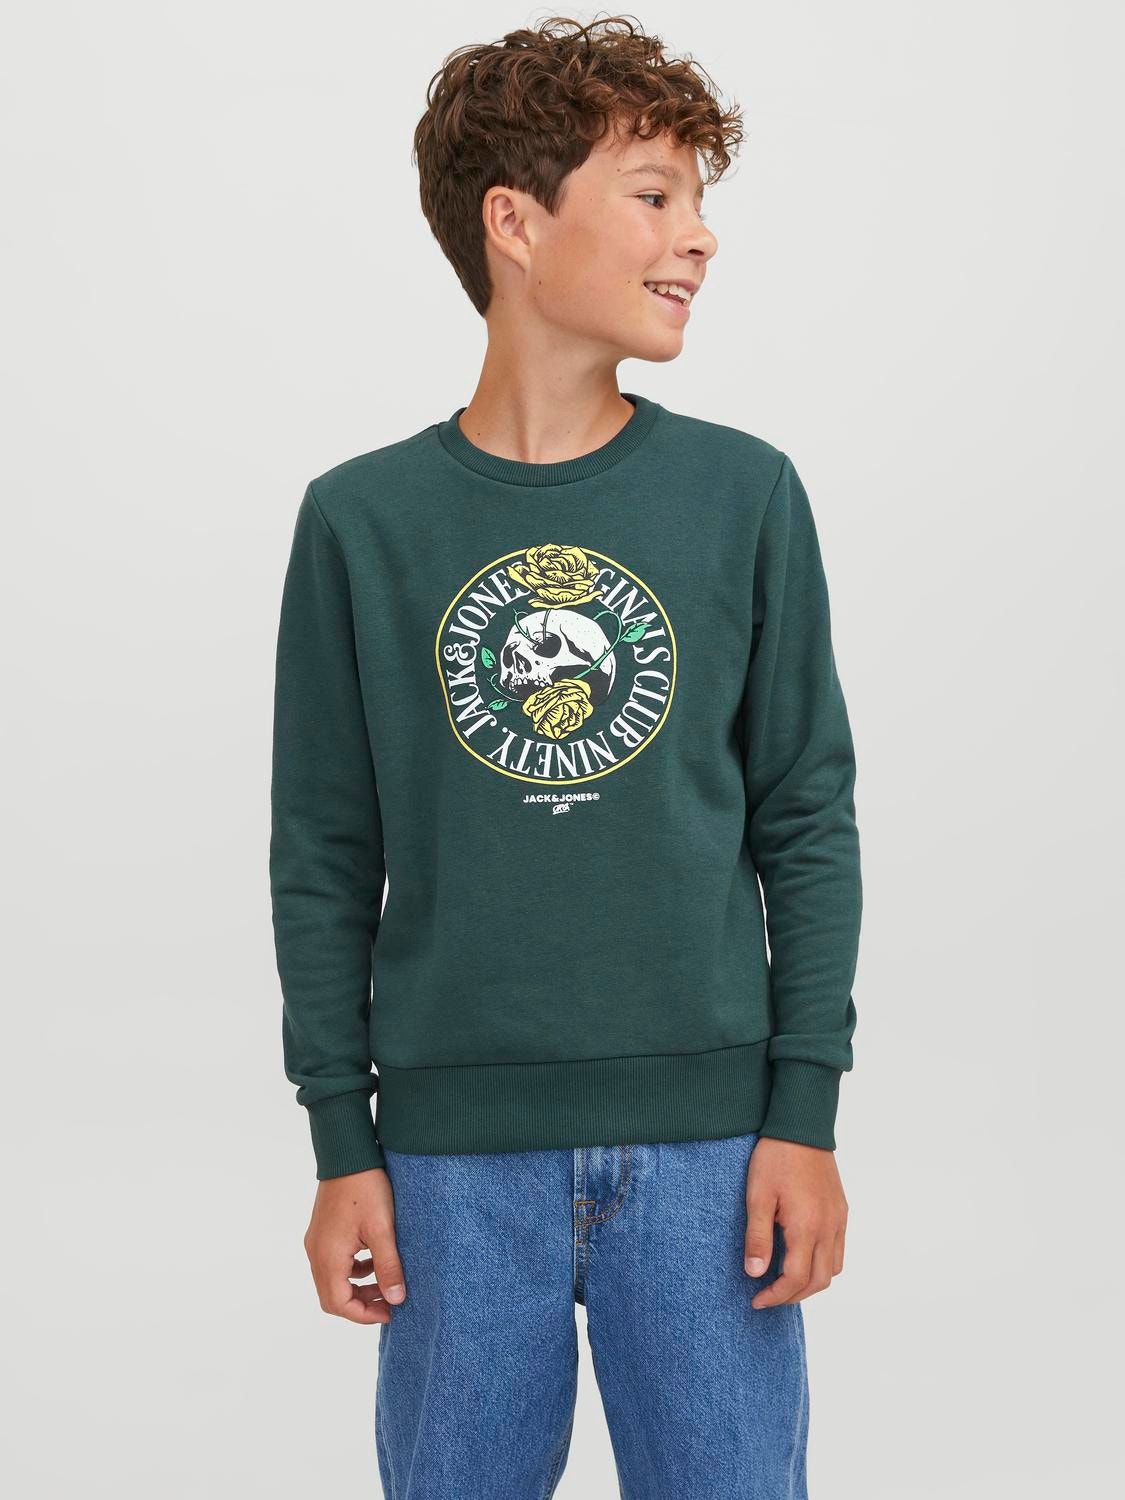 Jack & Jones Printed Crew neck Sweatshirt For boys -Magical Forest - 12247870